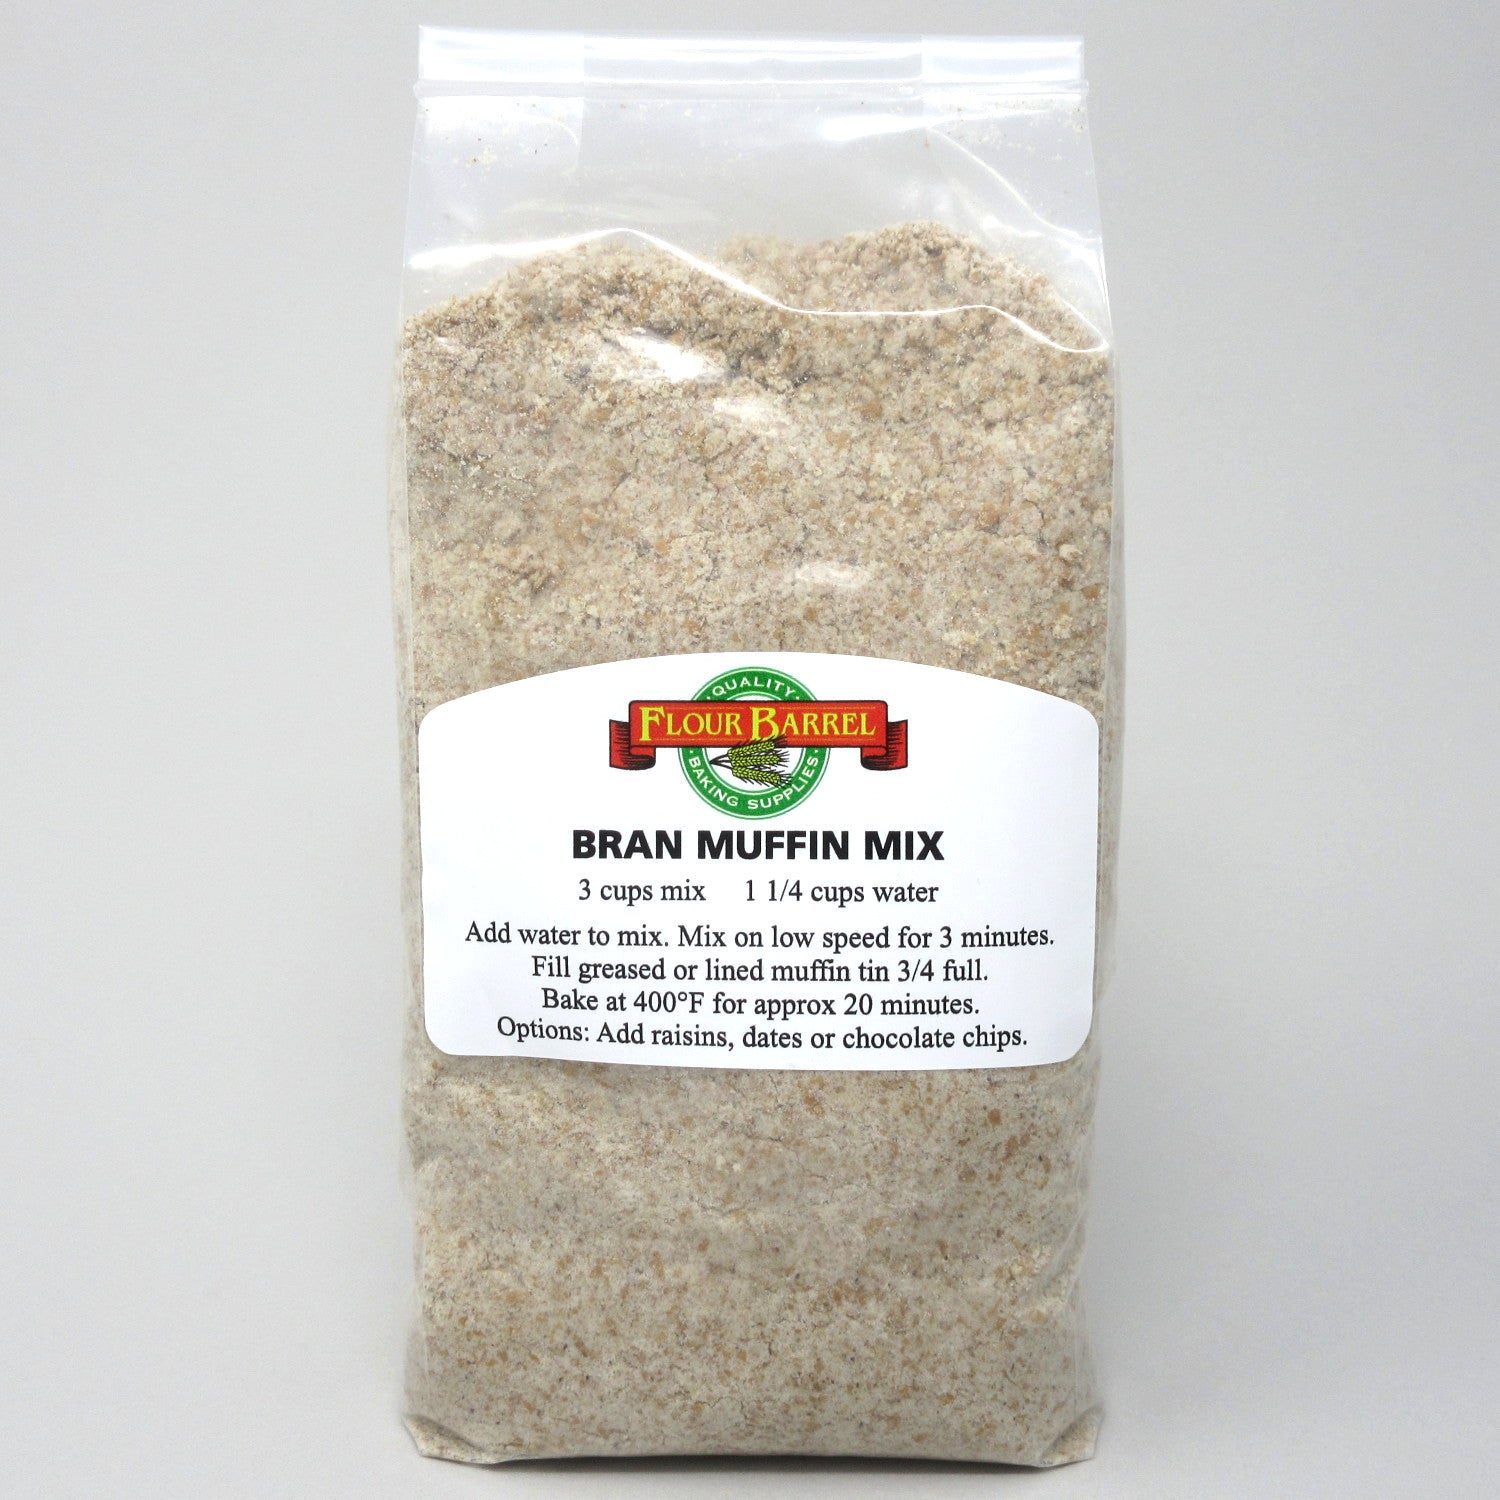 Flour Barrel product image - Bran Muffin Mix